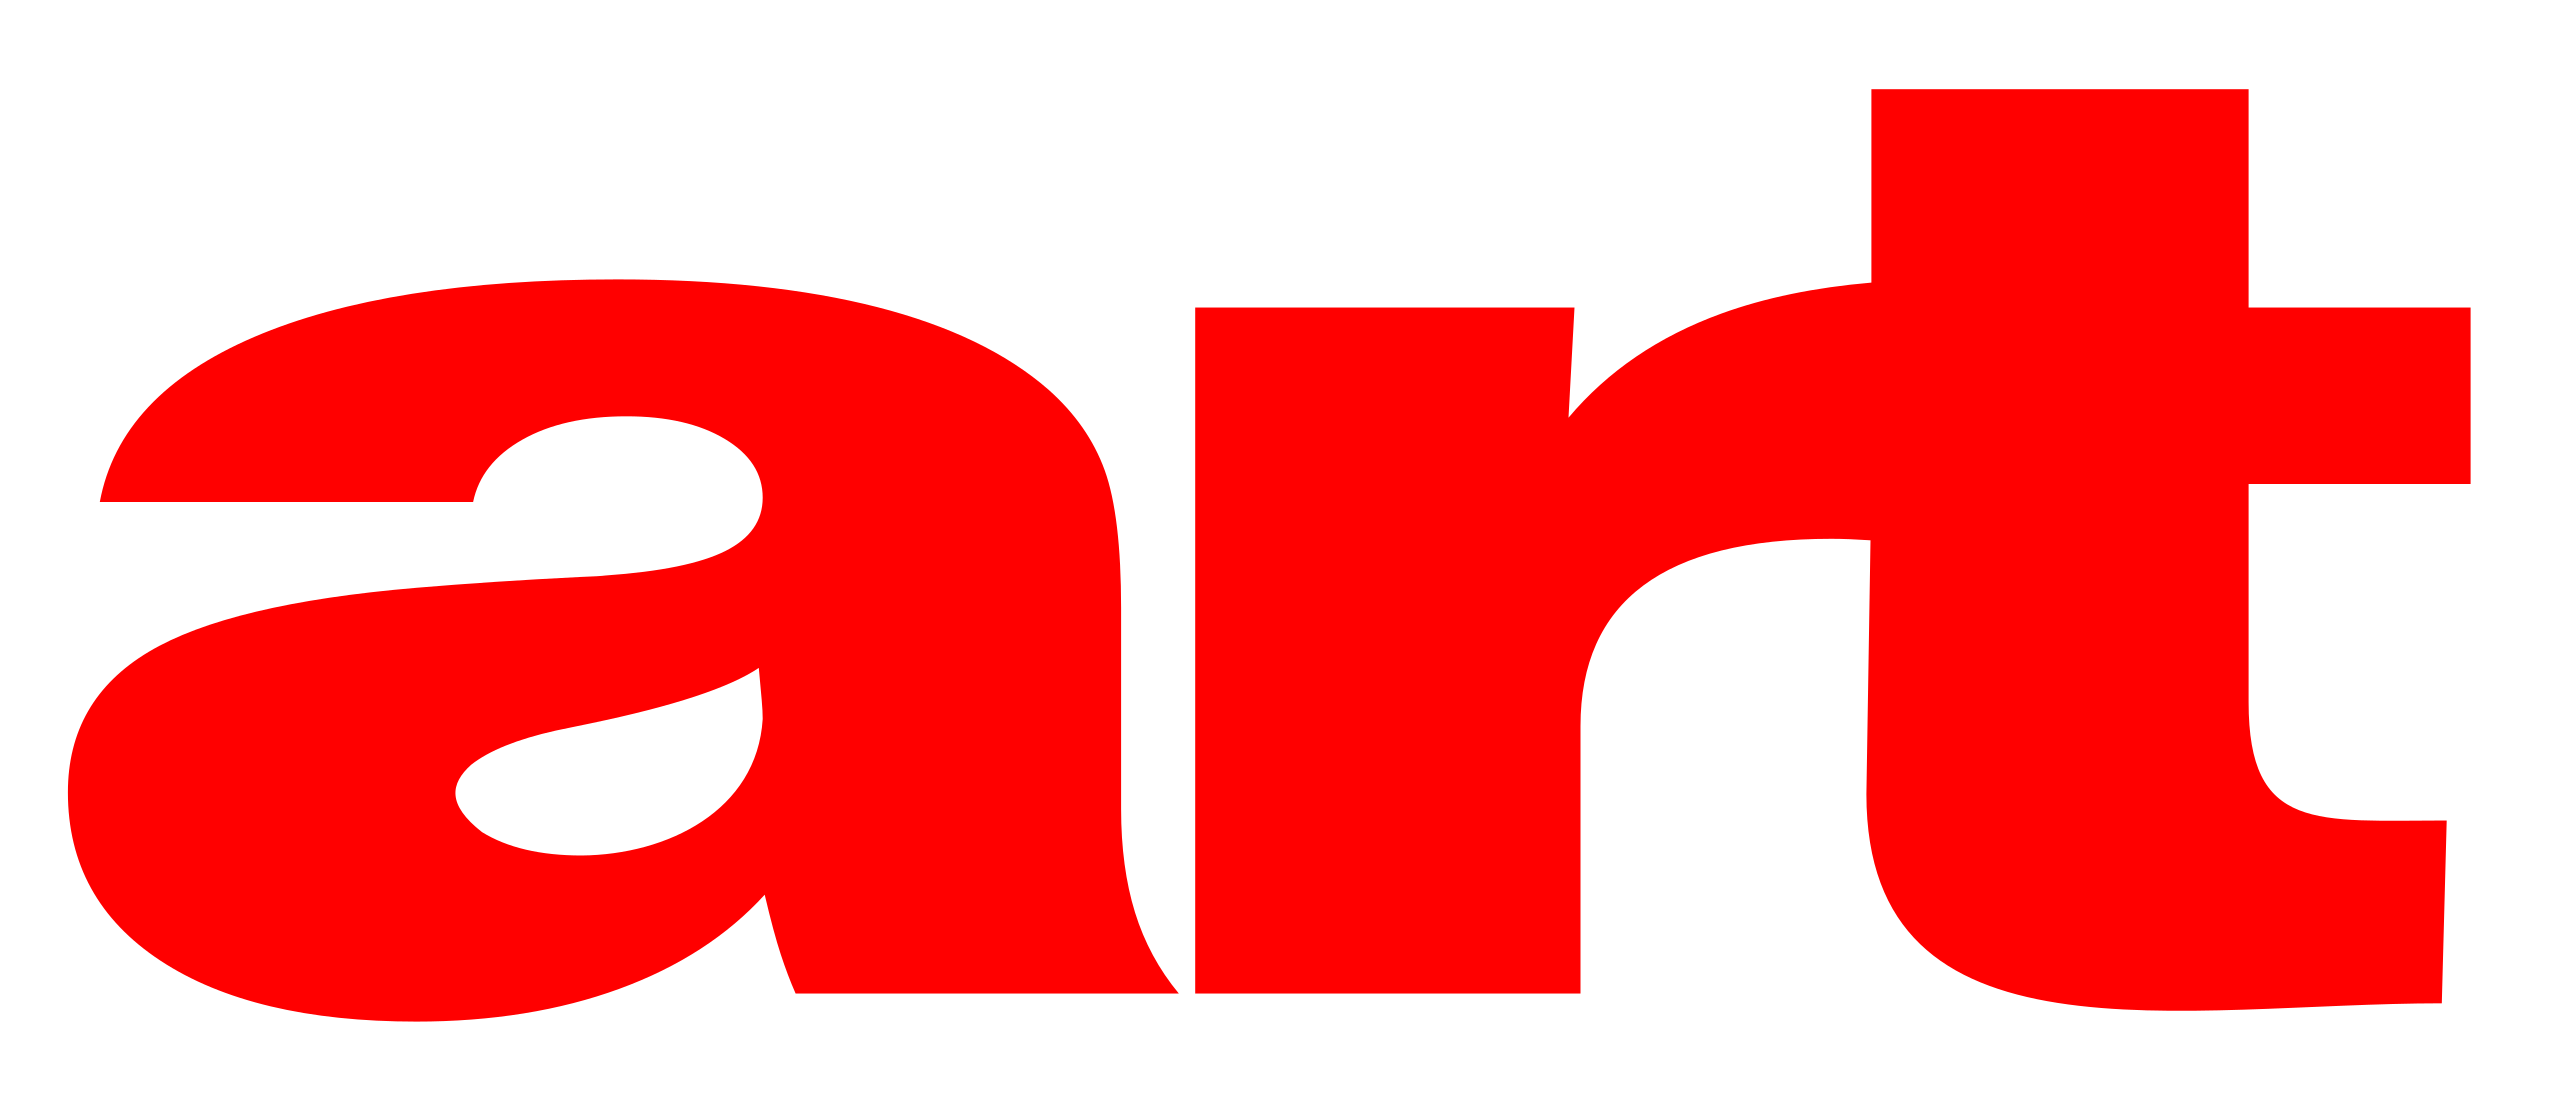 art-logo.png (42 KB)